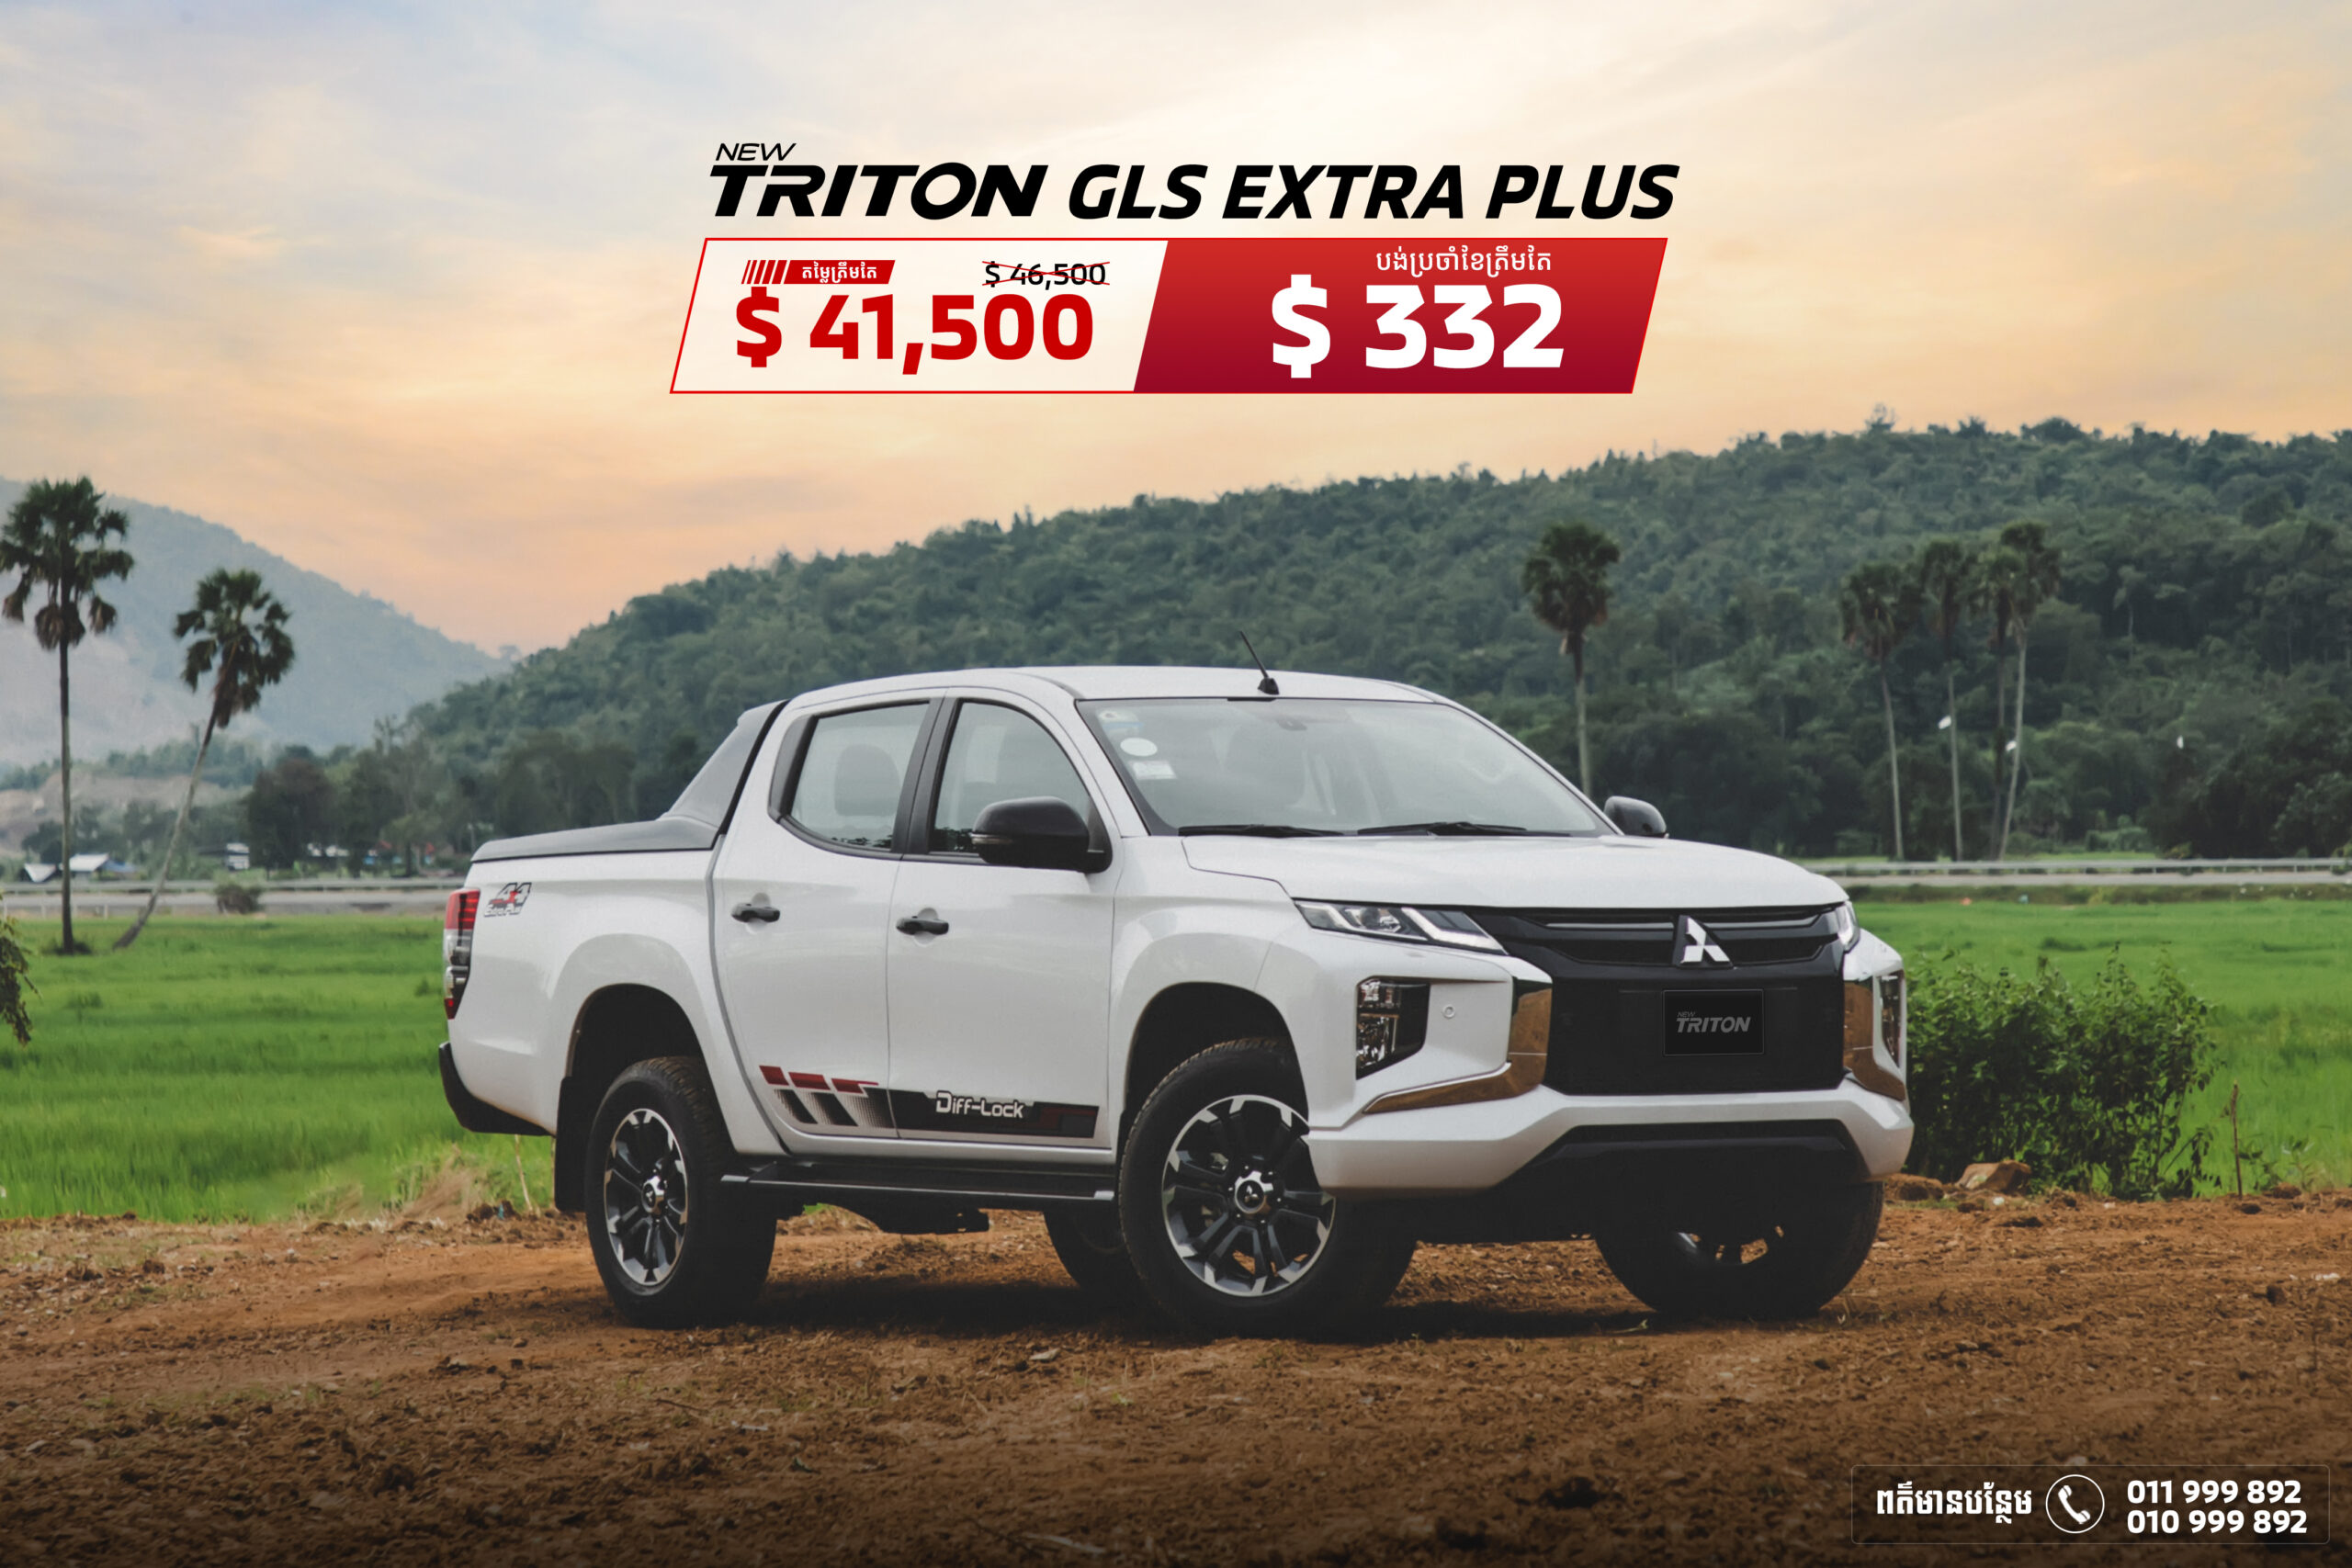 Special Price for Triton GLS Extra Plus